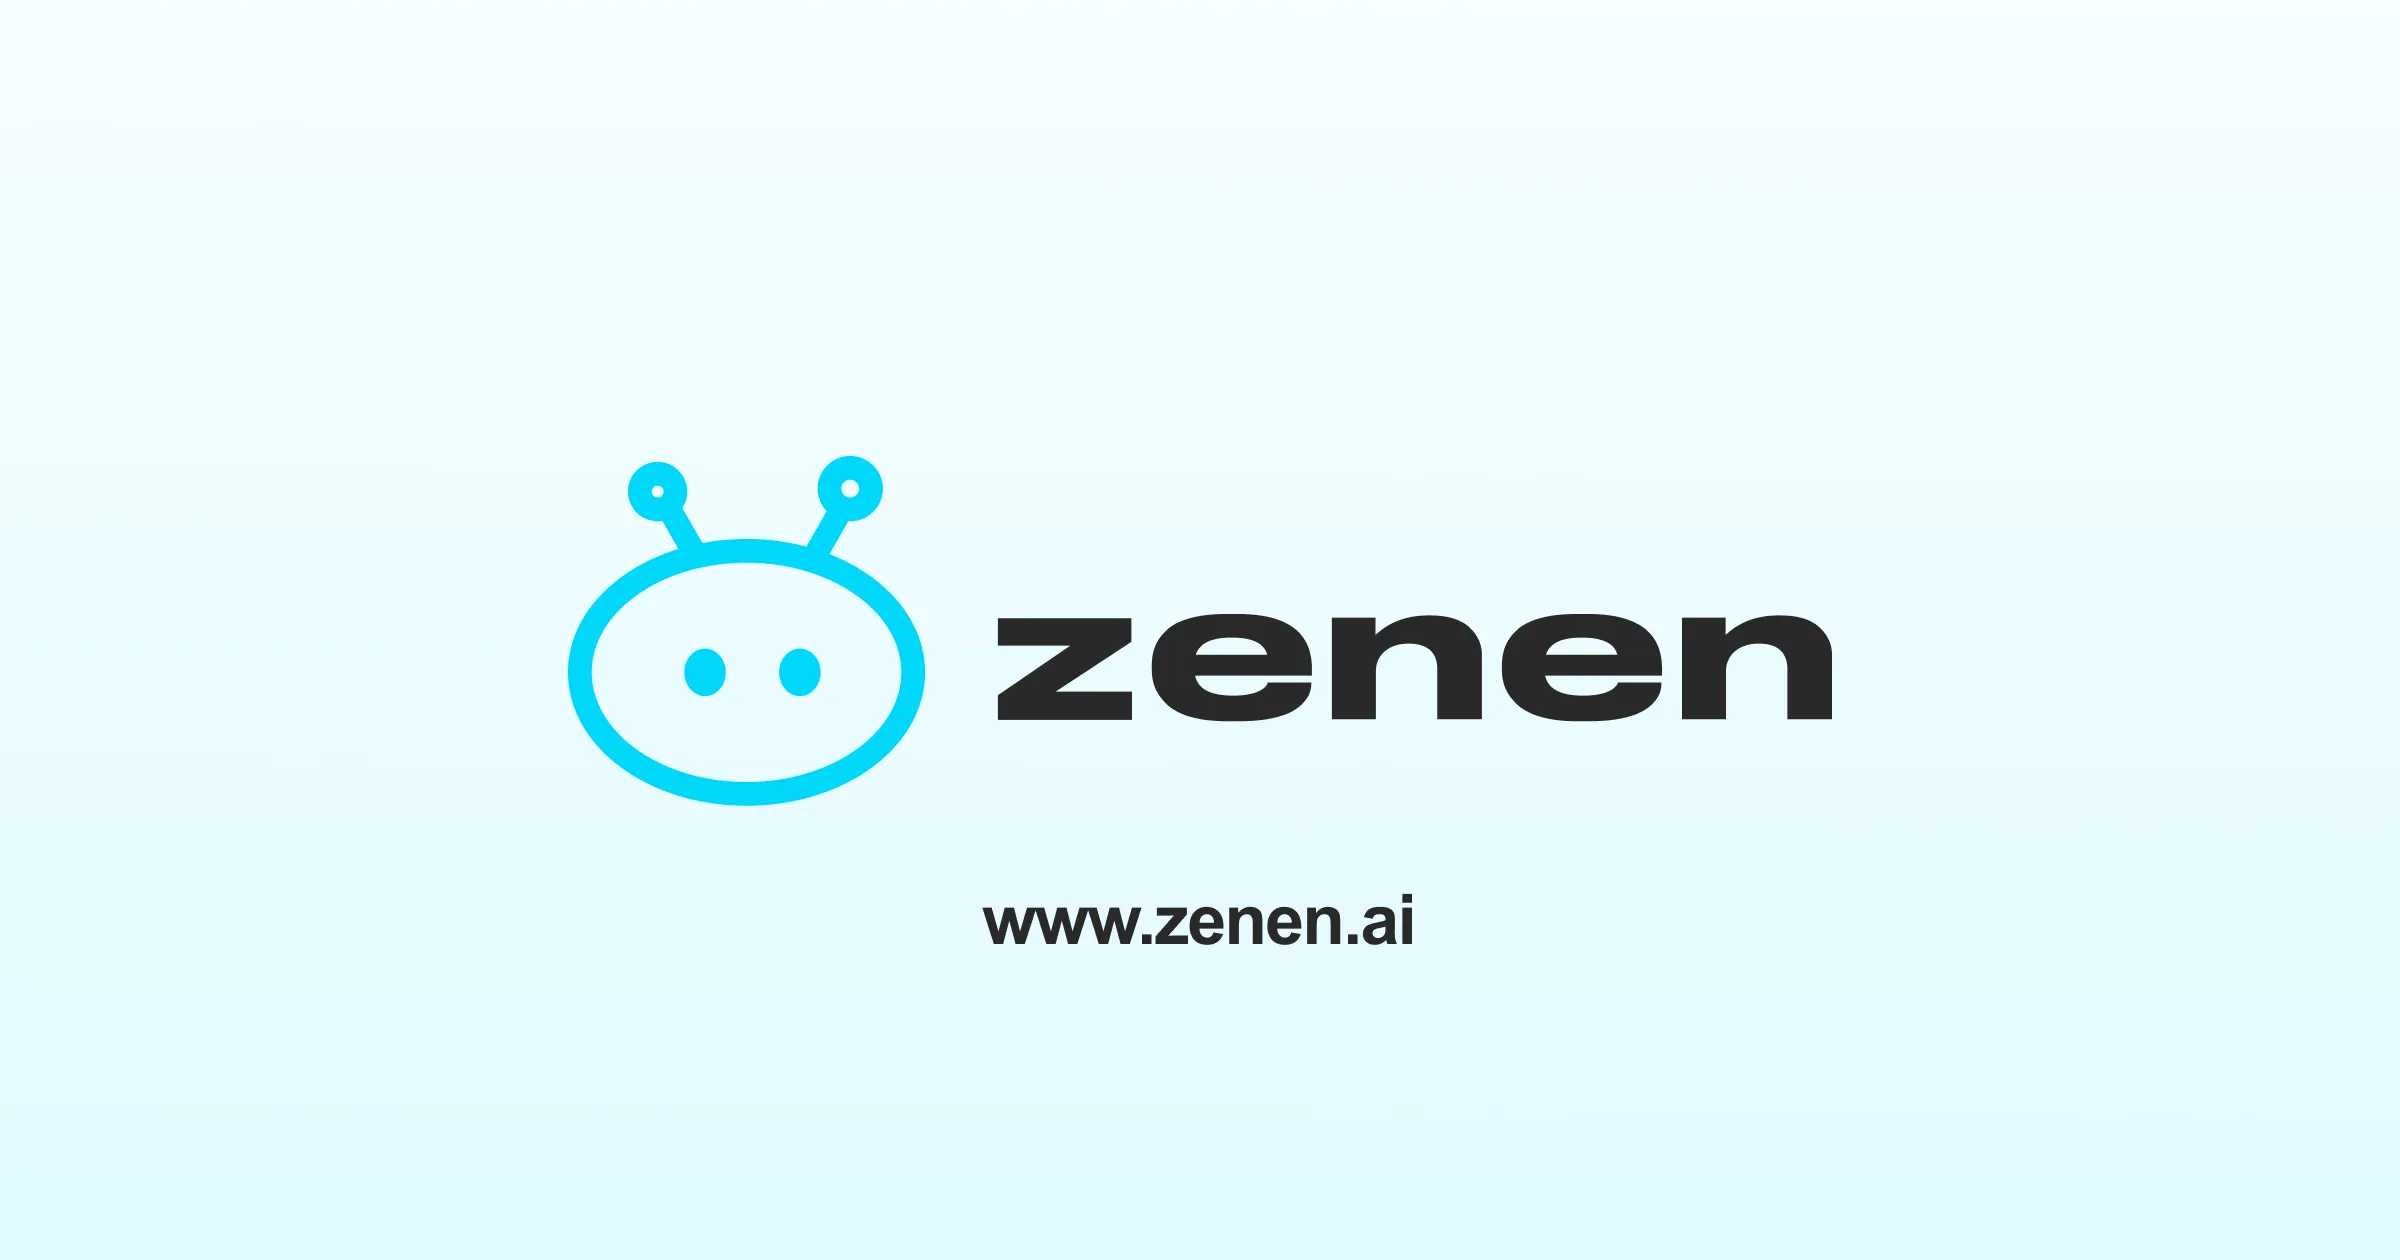 zenen.ai - Imagine ChatGPT and Siri had a baby, that's Zenen